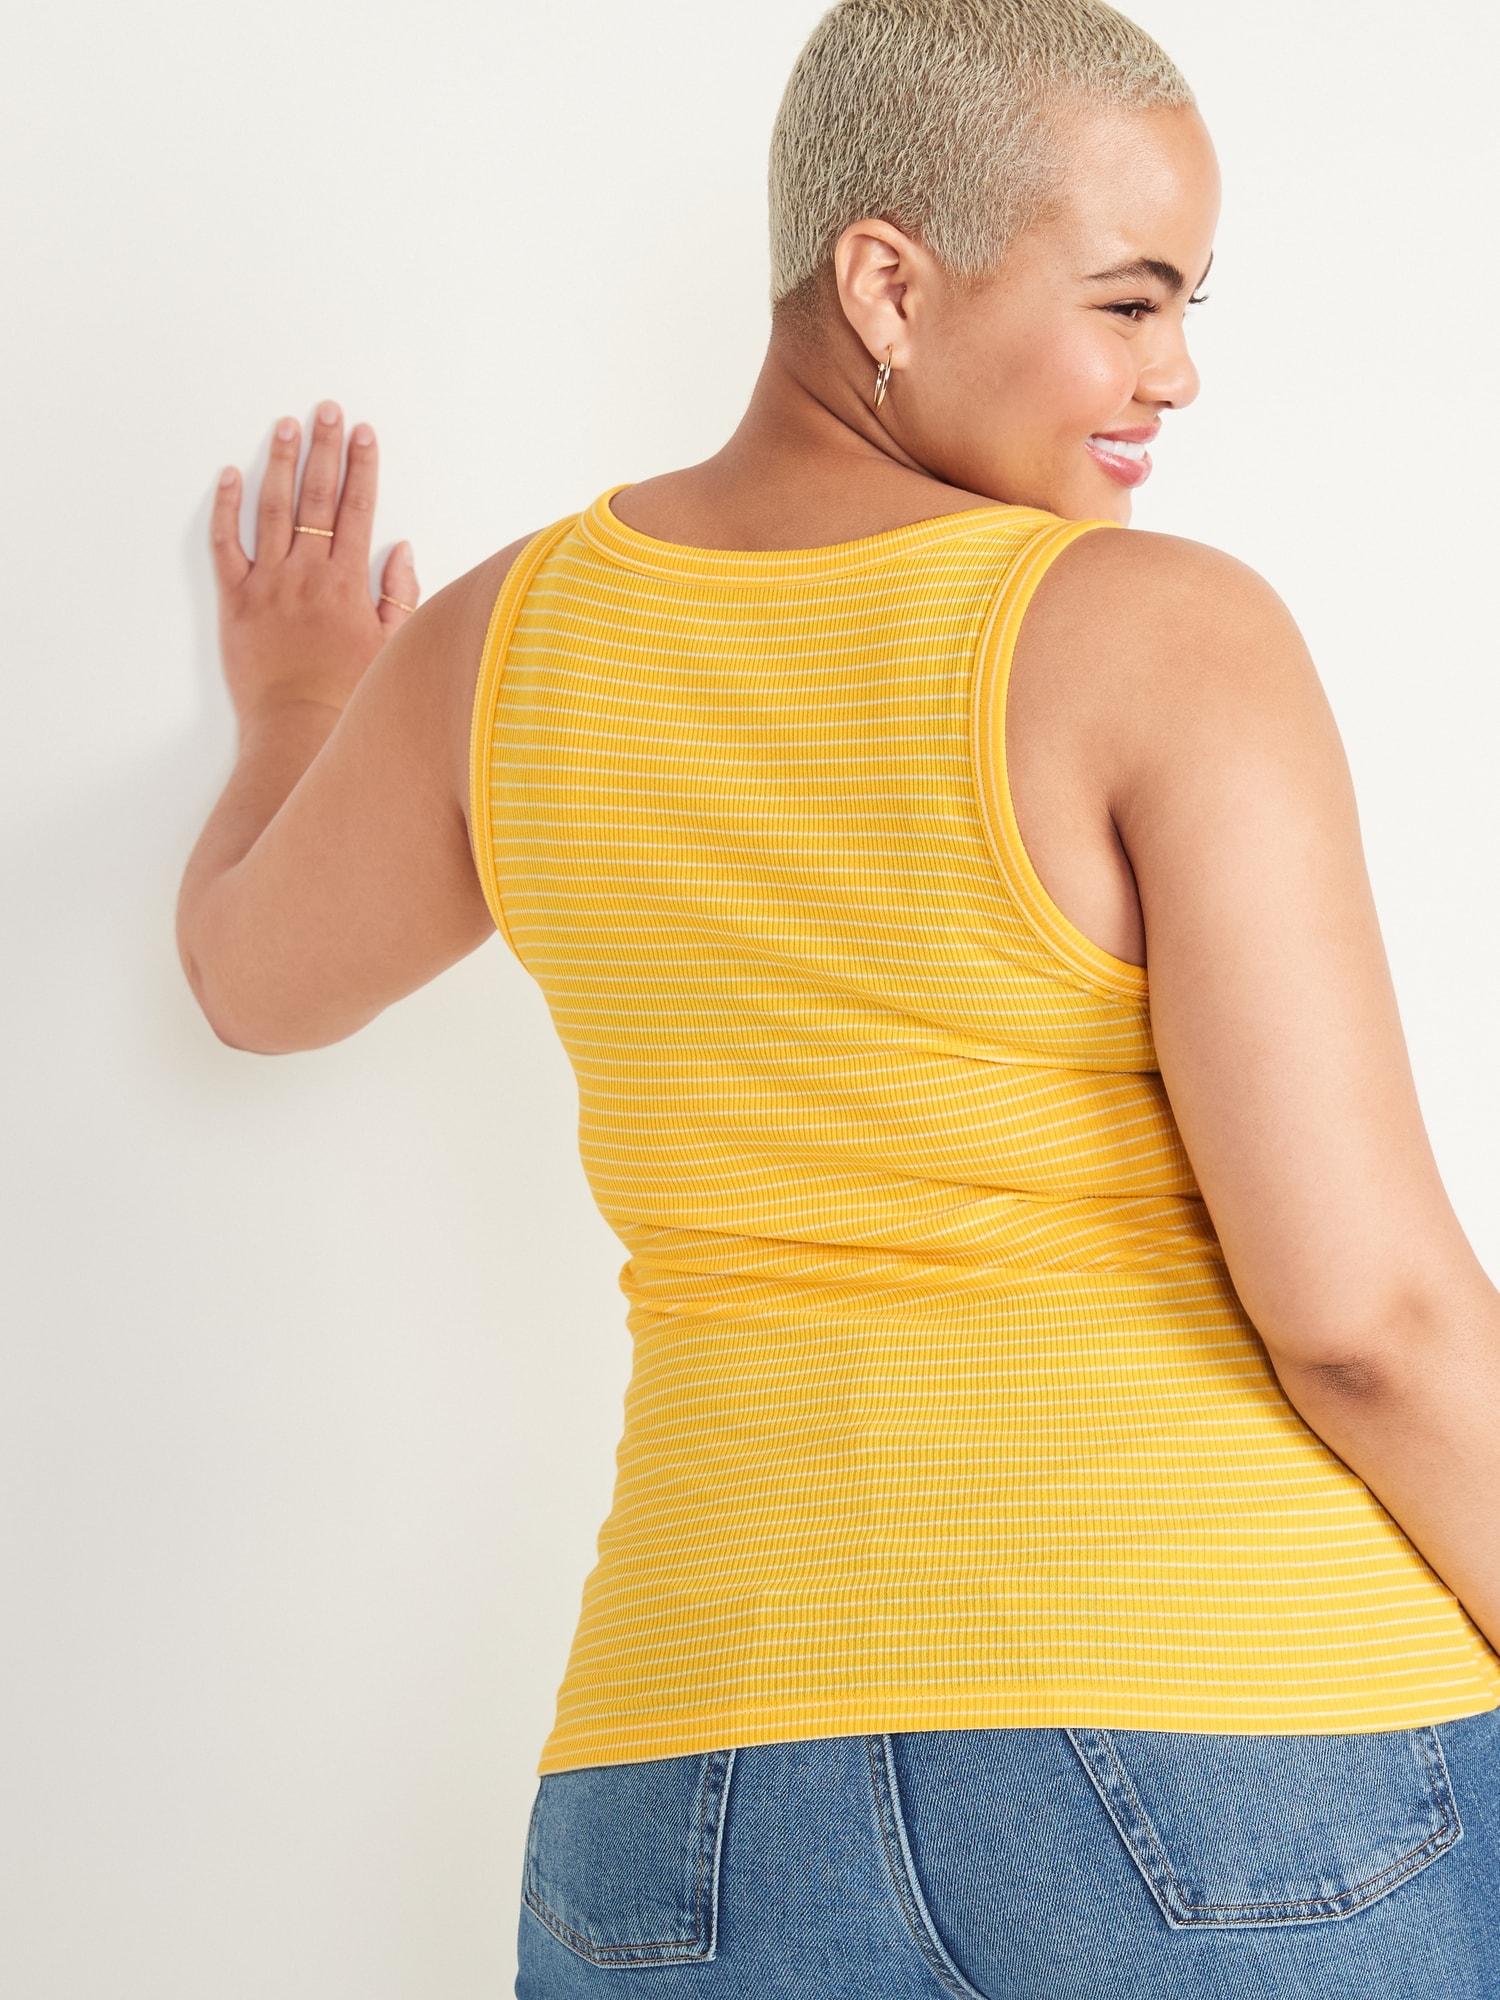 Asymmetric Straps Rib Knit Tank Top in Yellow - Retro, Indie and Unique  Fashion